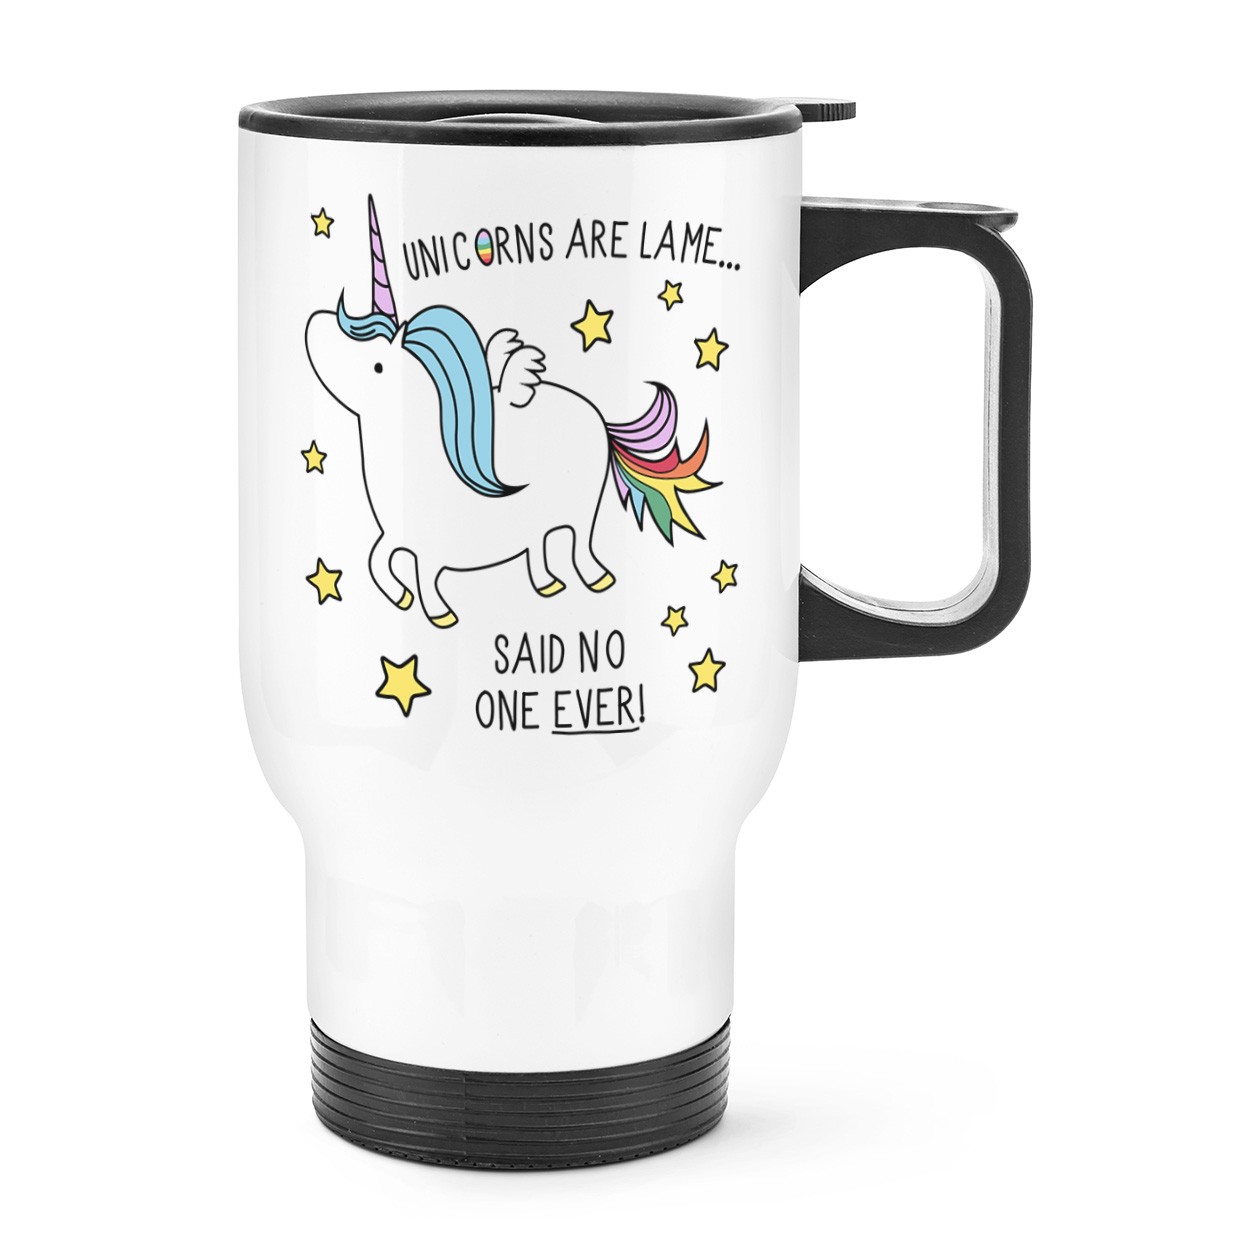 Unicorns Are Lame Said No One Ever Travel Mug Cup With Handle